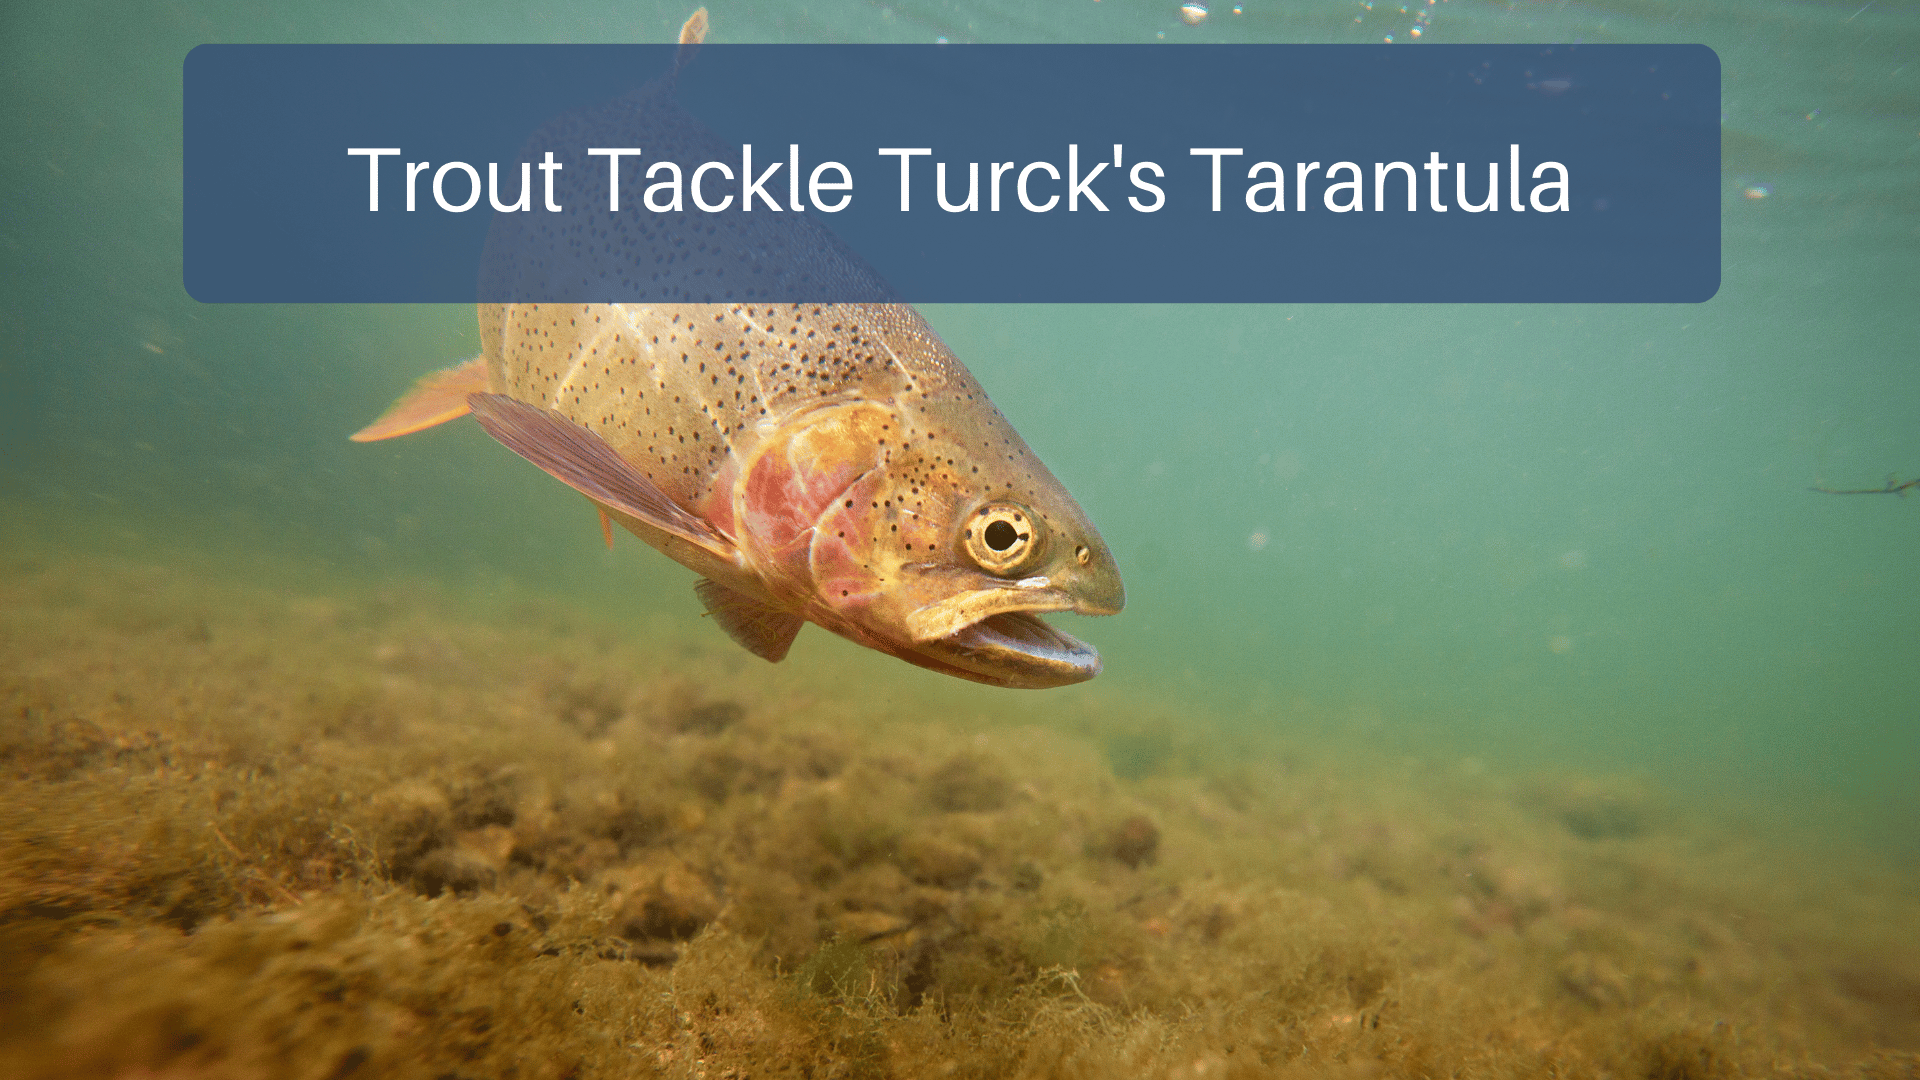 Trout Tackle Turck’s Tarantula